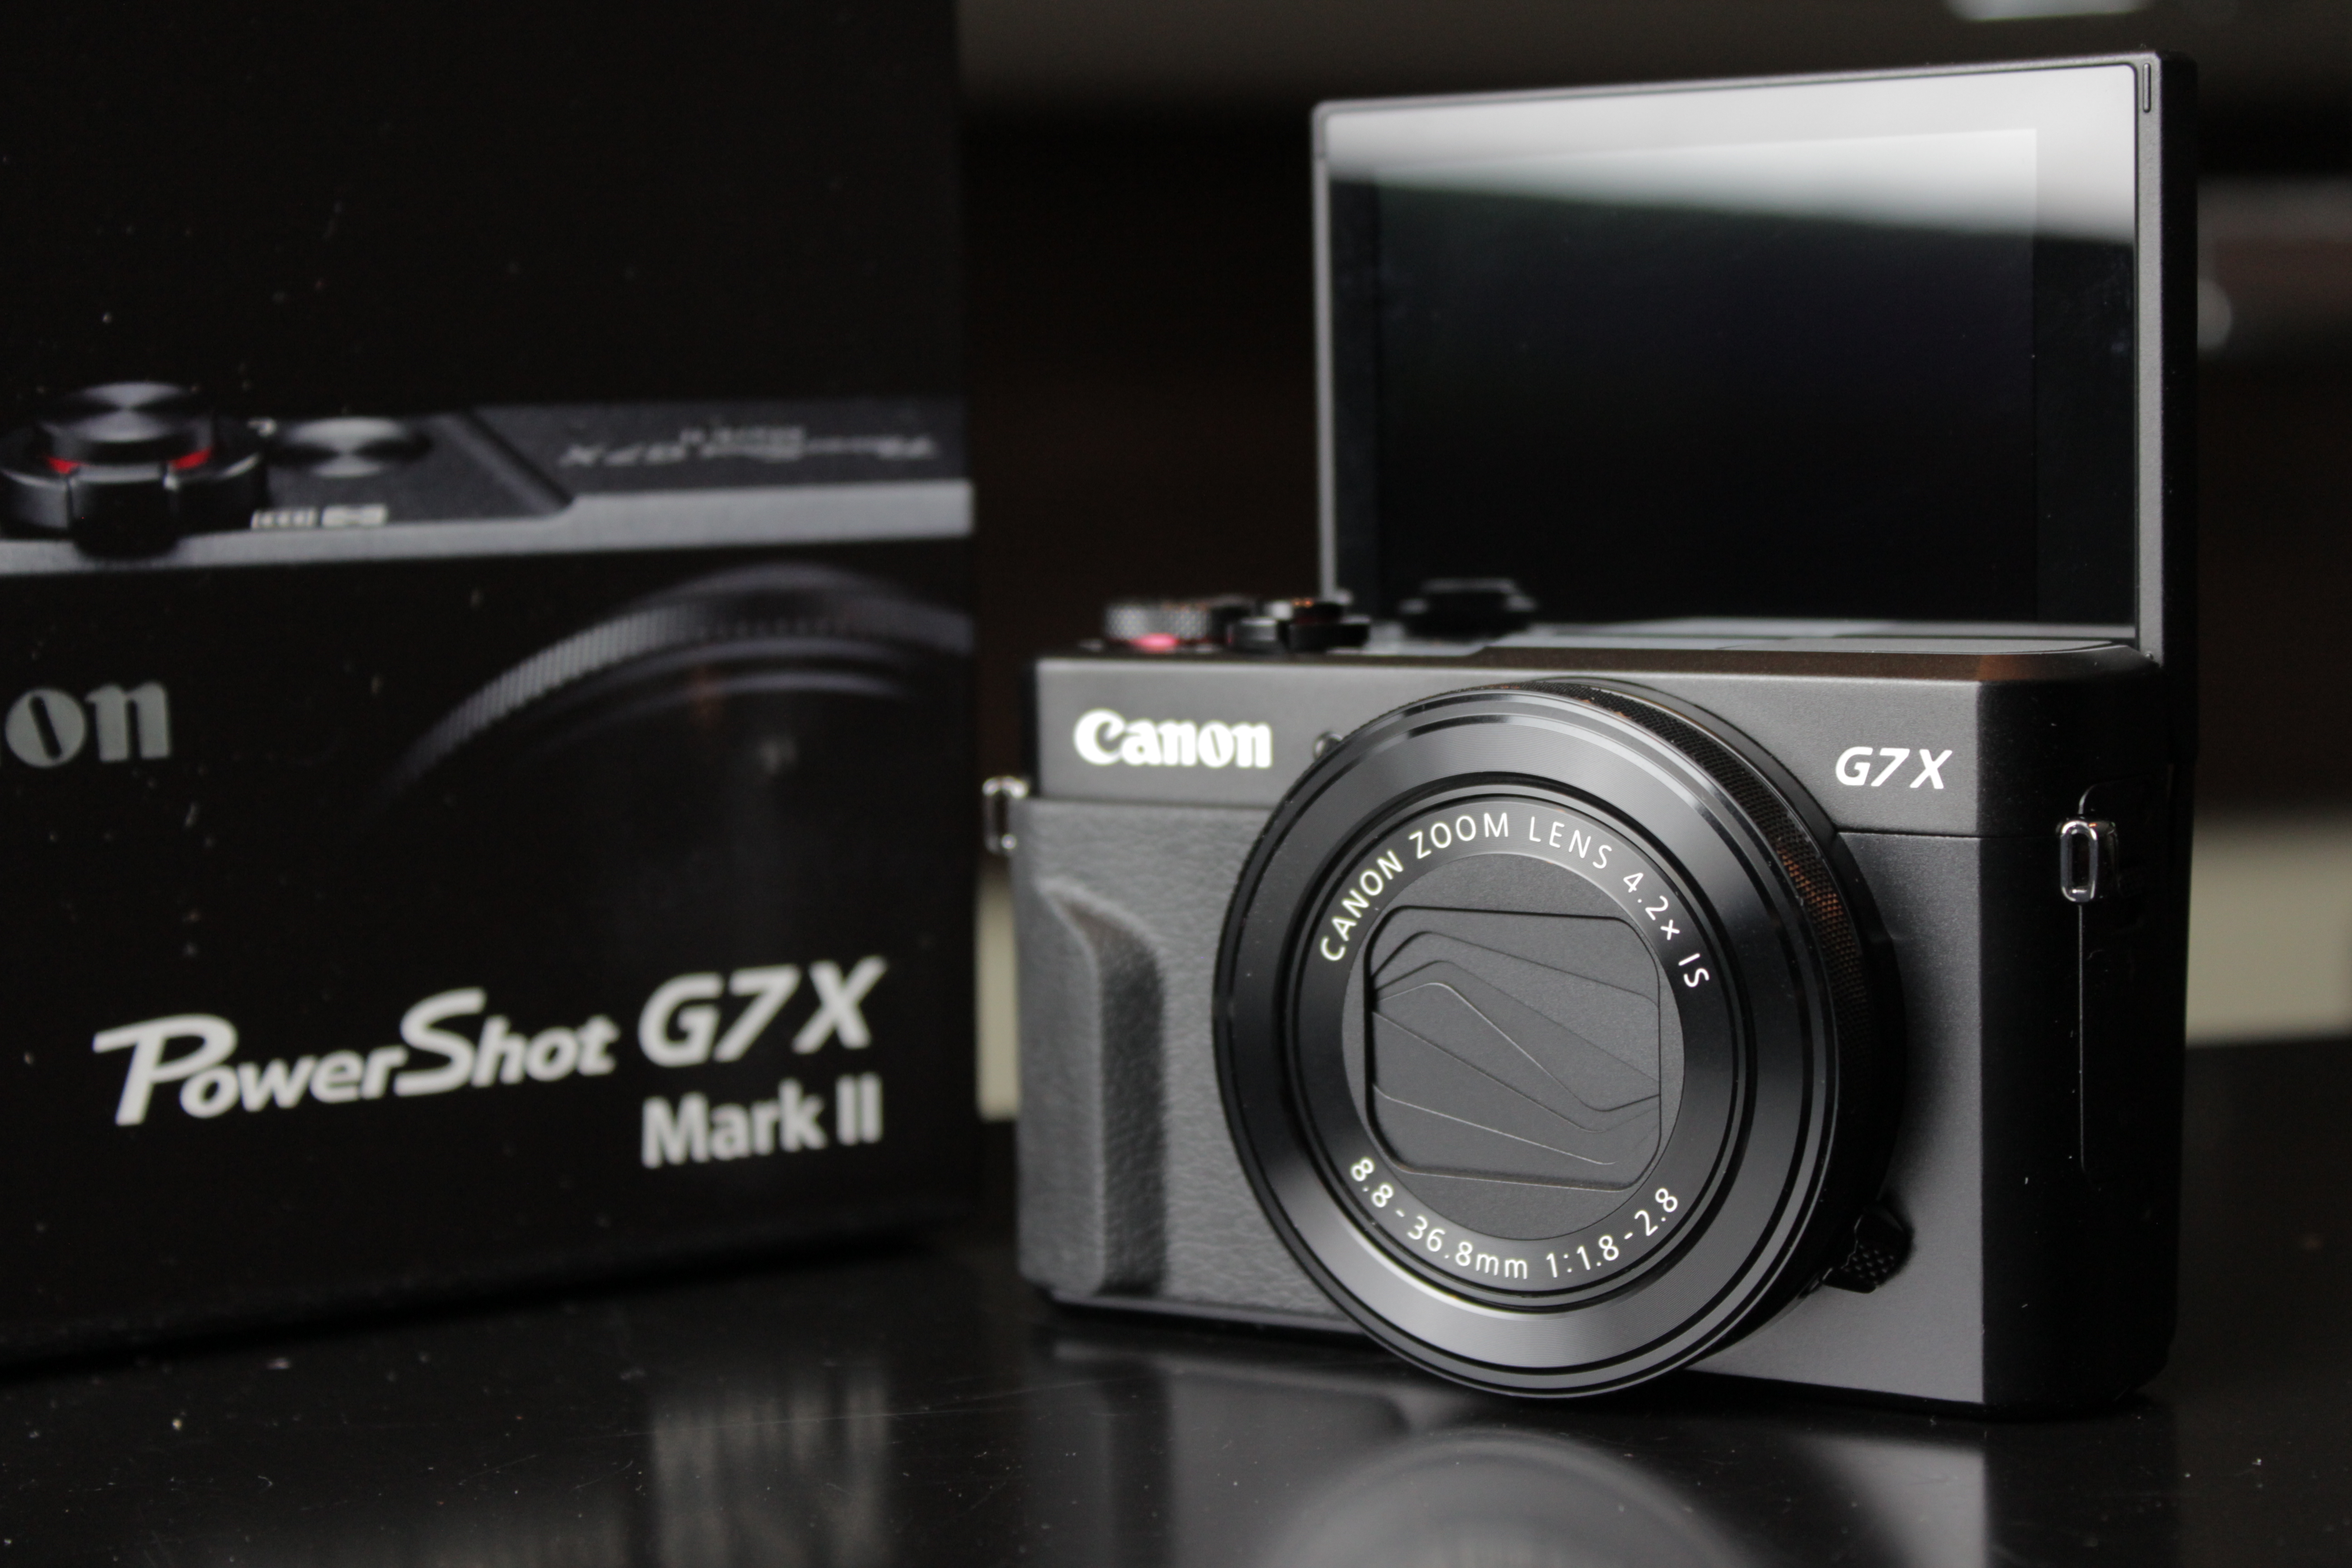  Canon  G7X  Mark  II camera review Tom Antos Films